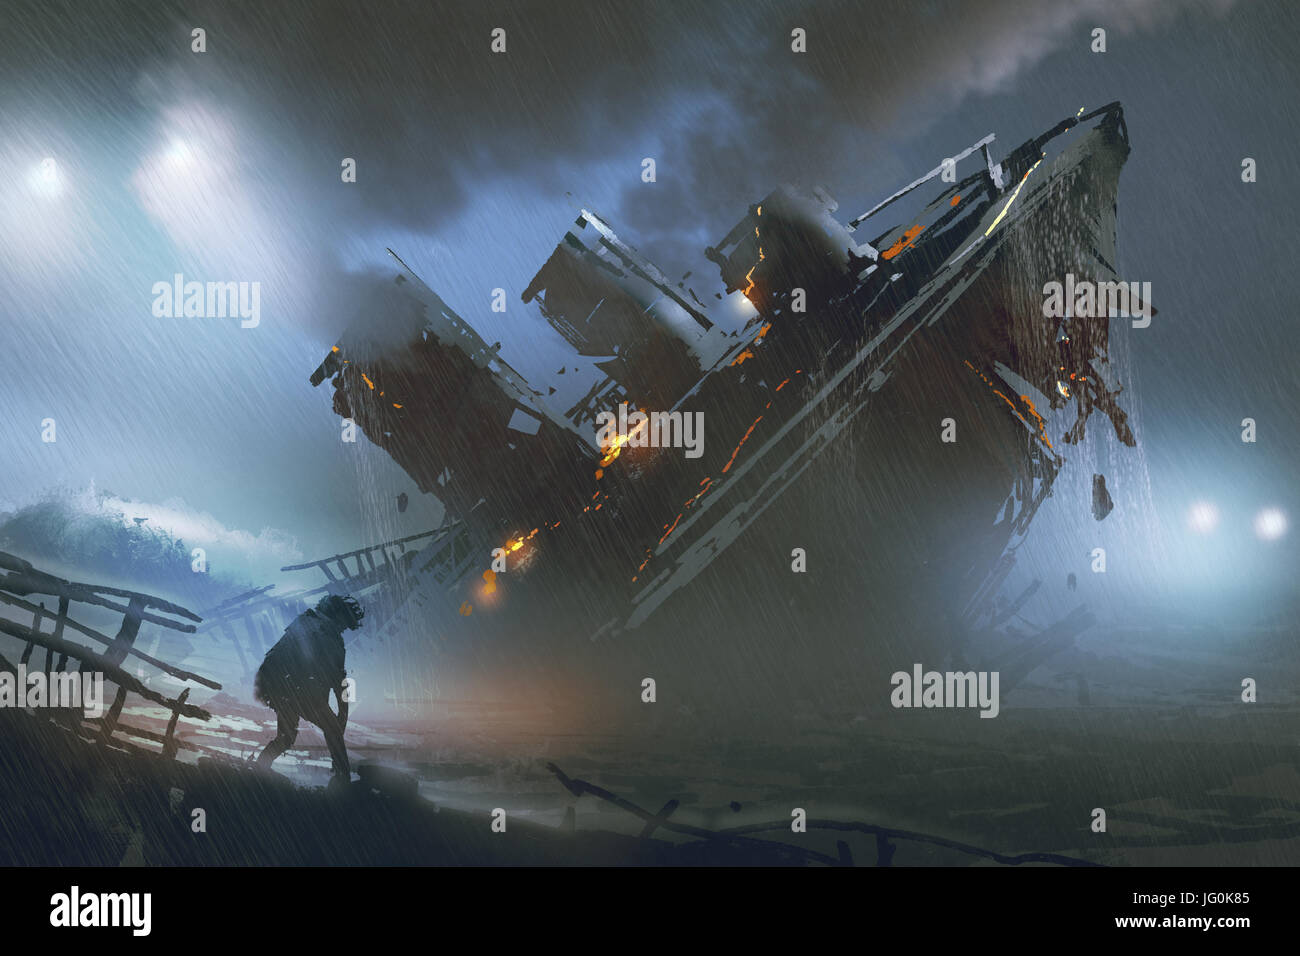 scene of man escape a sinking ship in rainy night, digital art style, illustration painting Stock Photo